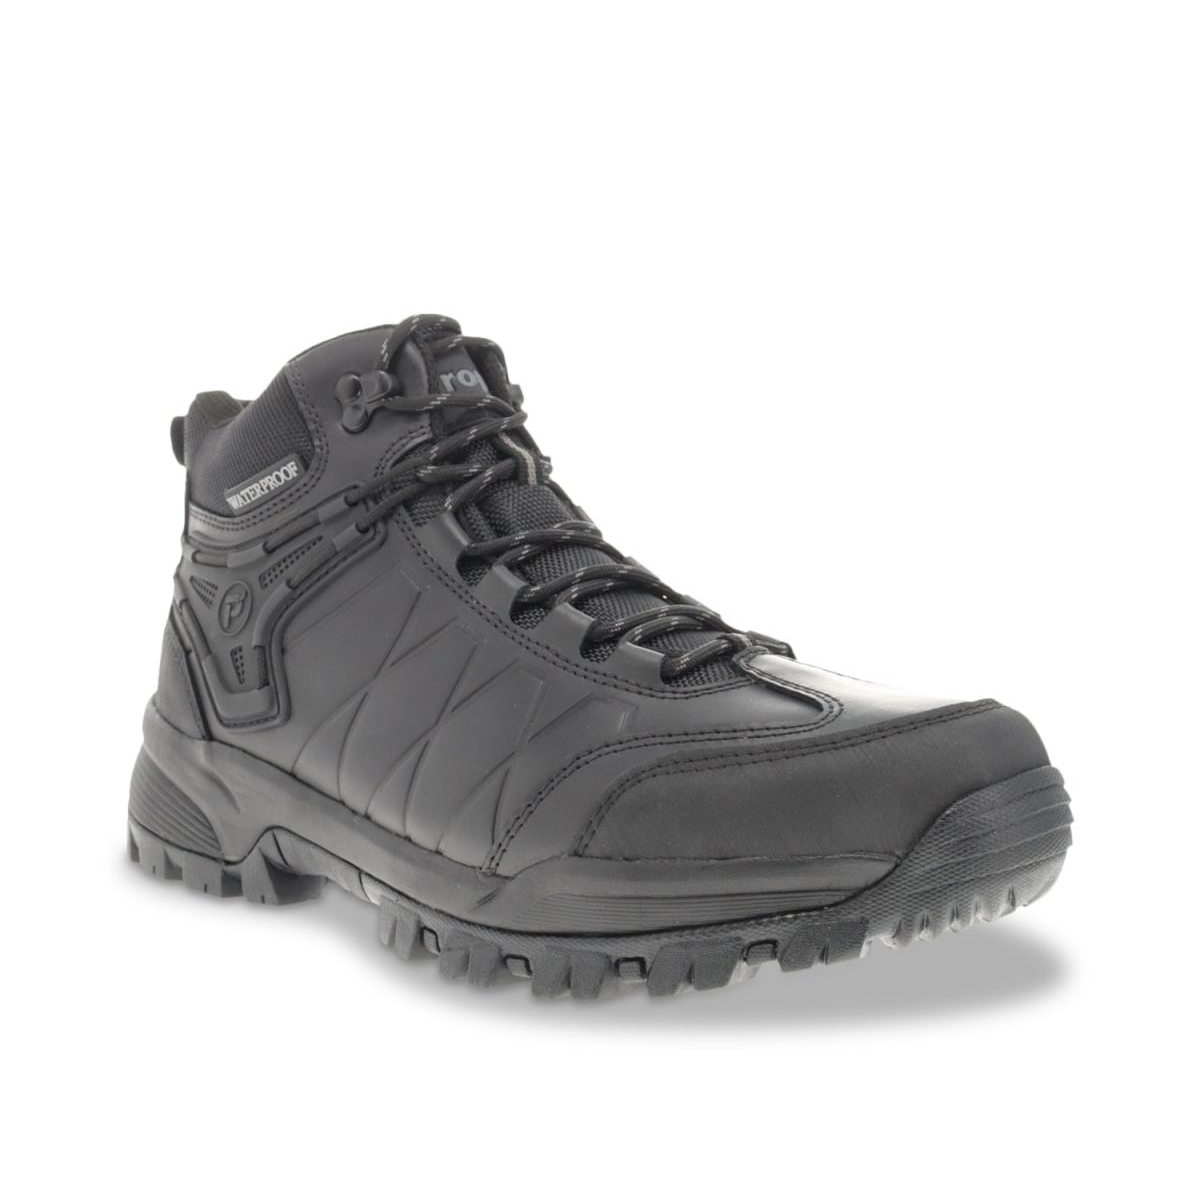 Propet Men's Ridge Walker Force Hiking Boots Black - MBA052LBLK BLACK - BLACK, 16 XX-Wide